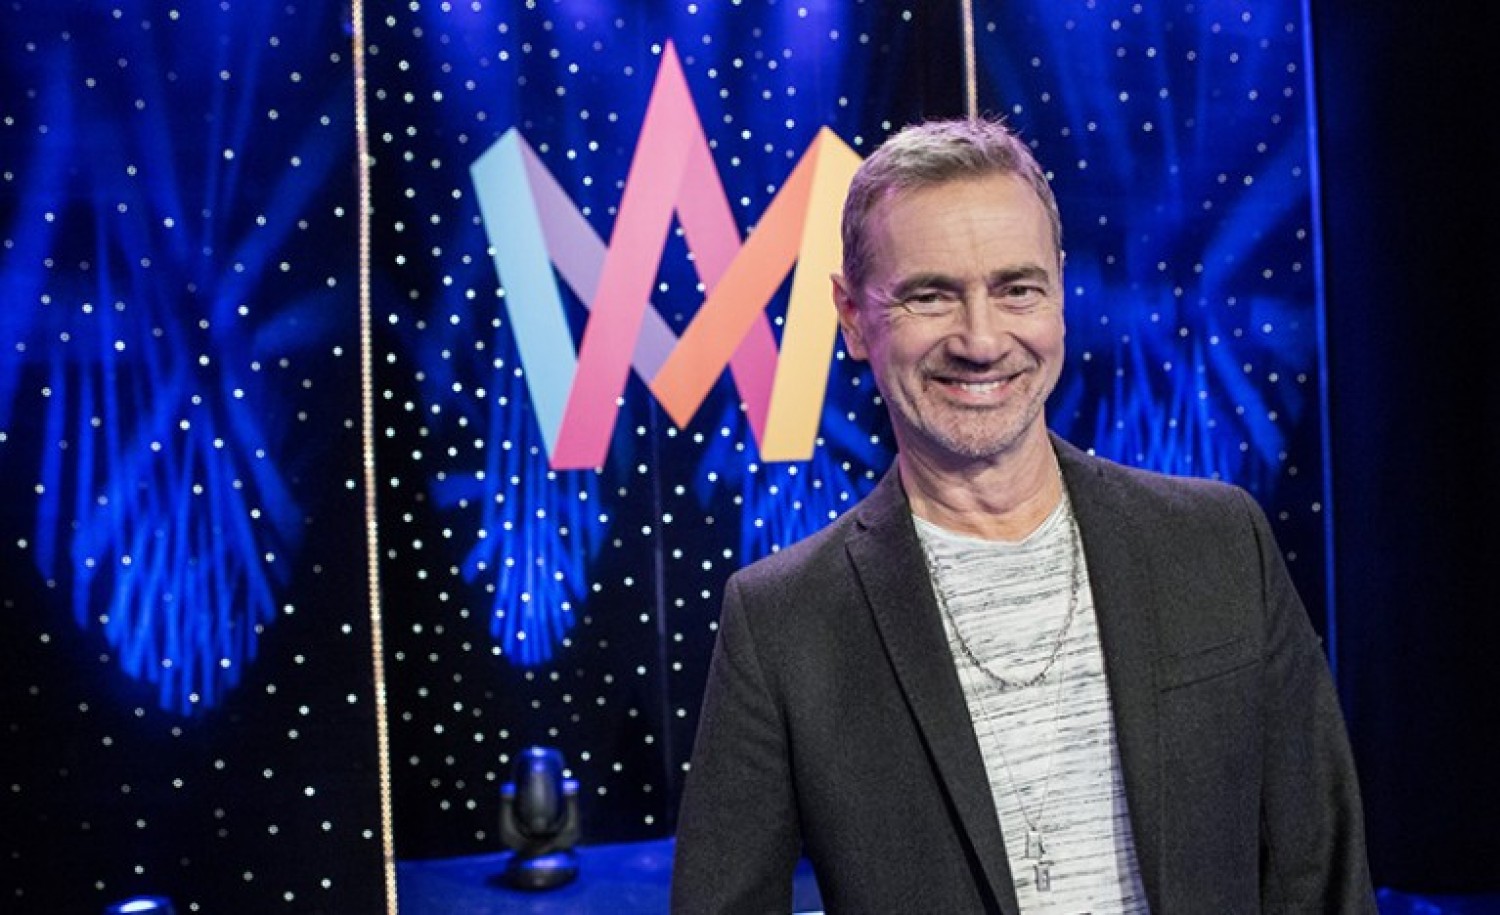 Christer Björkman presentaría el Melodifestivalen junto a gran estrella invitada cada semana - eurovision-spain.com